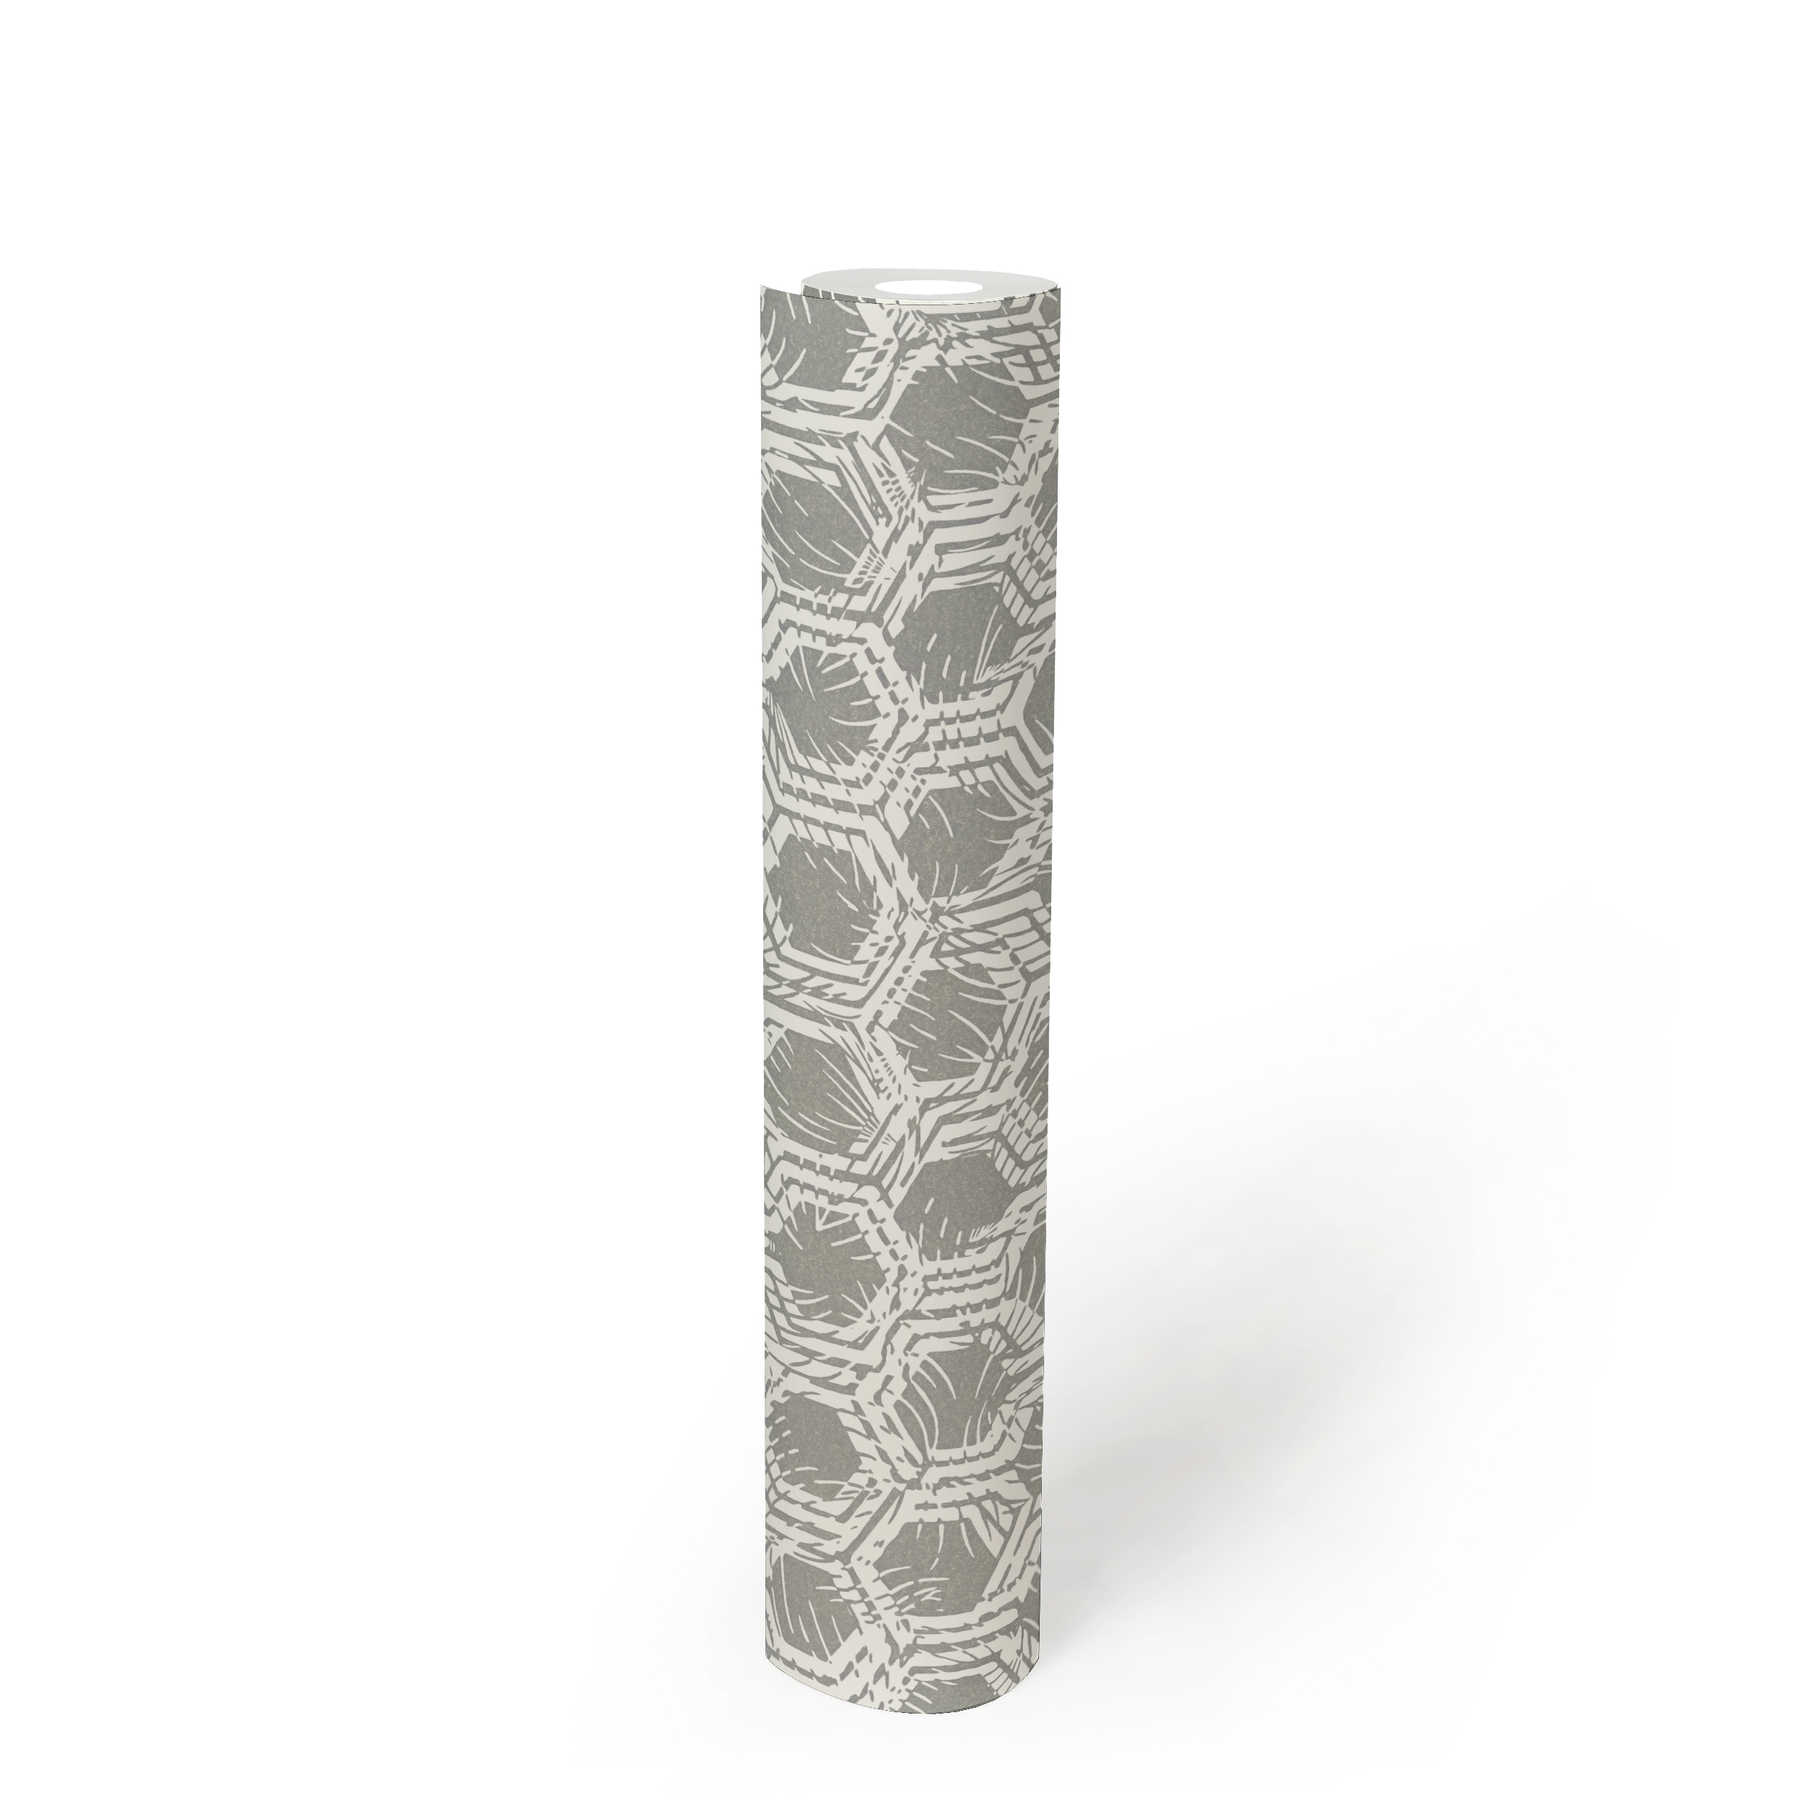             Geometric pattern wallpaper with metallic colours - silver, white
        